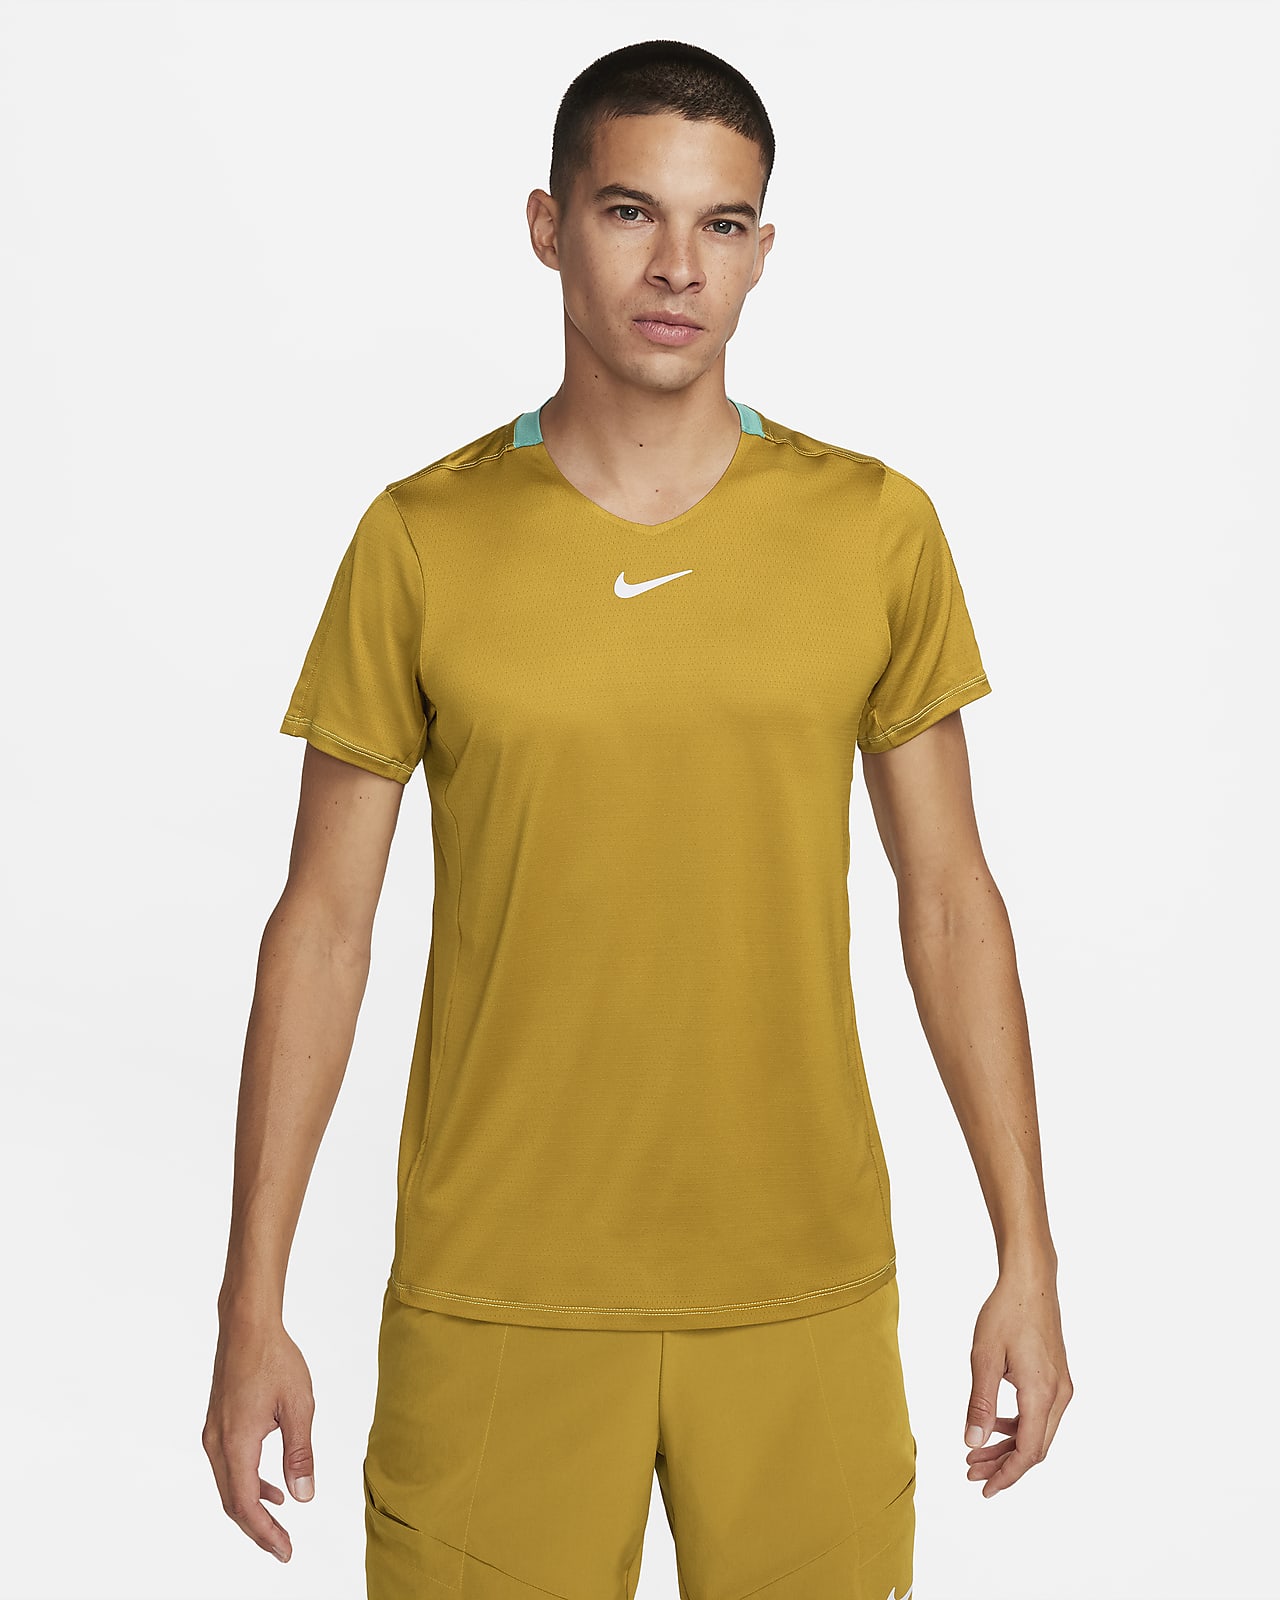 NikeCourt Dri-FIT Advantage Men's Tennis Top